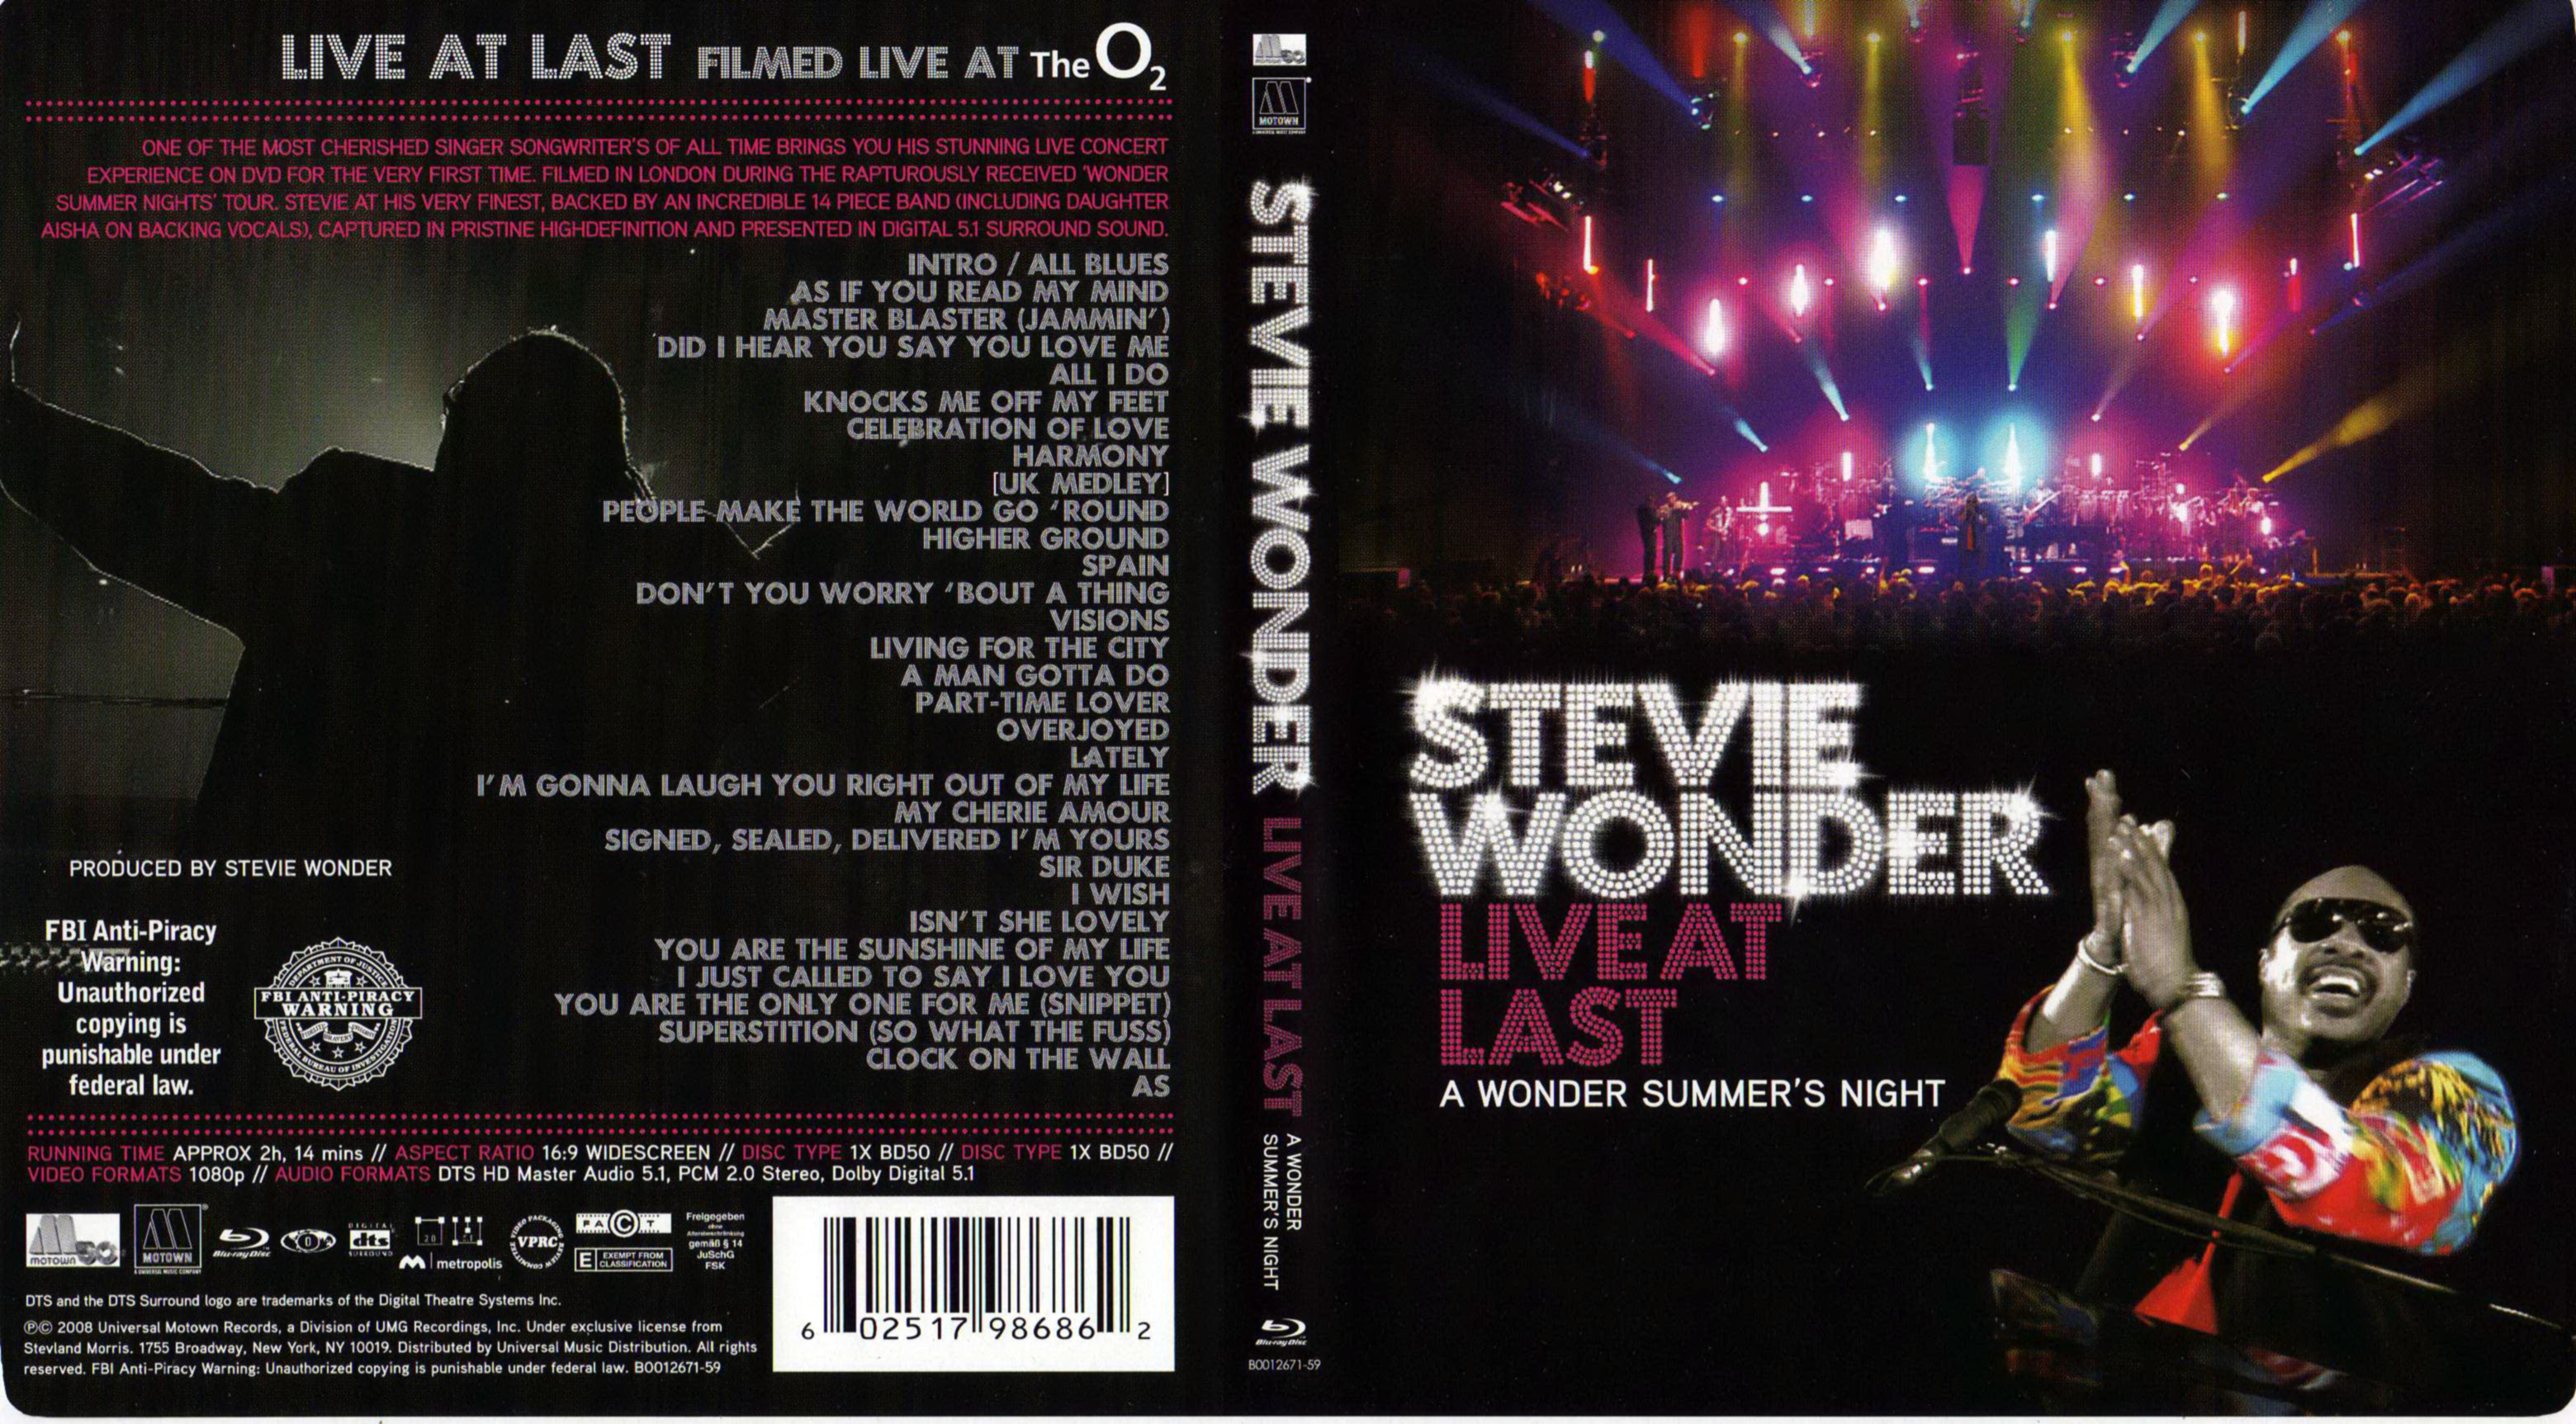 Jaquette DVD Steve Wonder - Live at last (BLU-RAY)